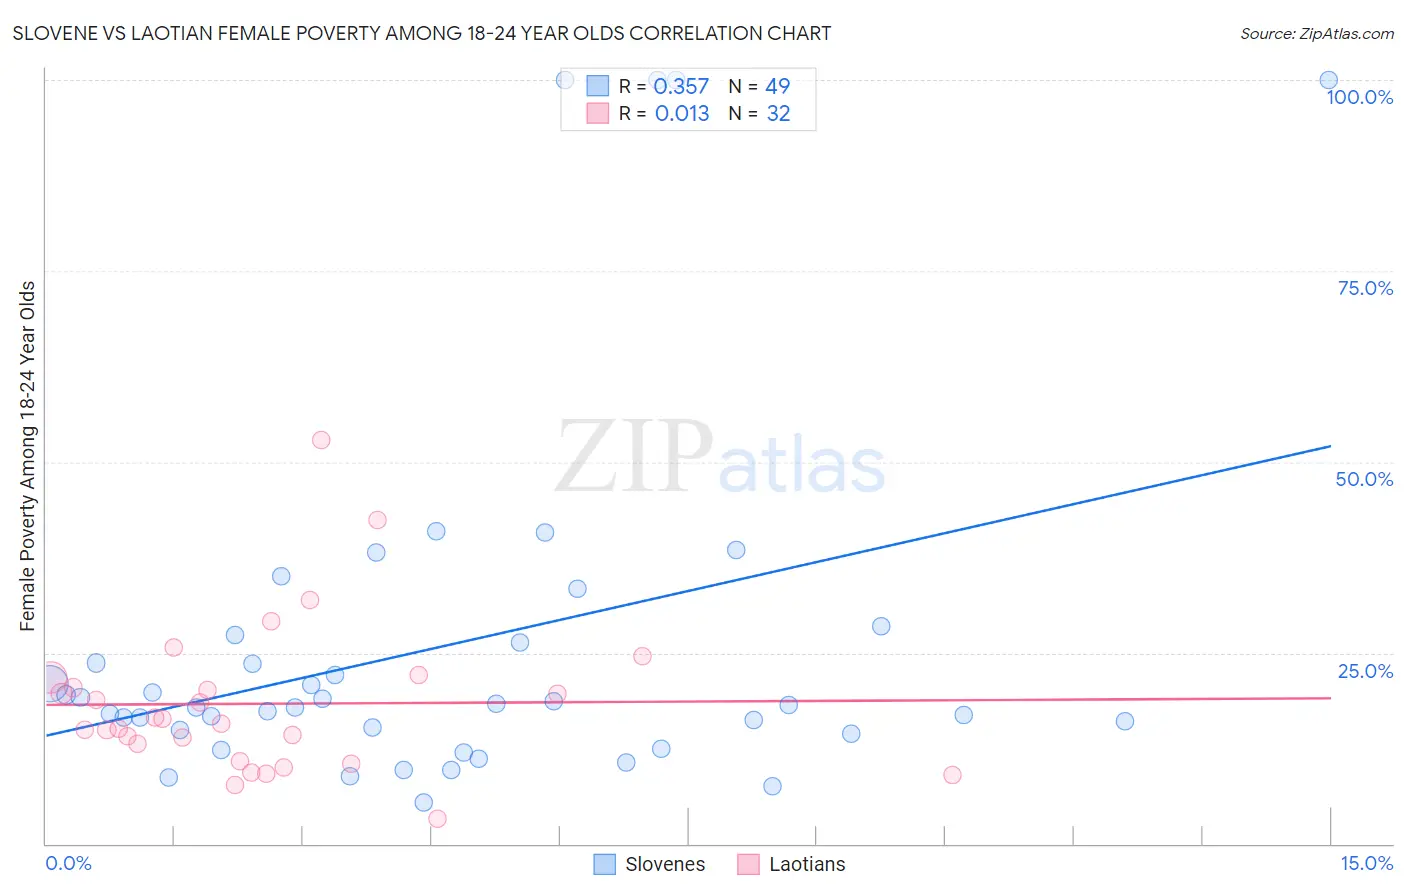 Slovene vs Laotian Female Poverty Among 18-24 Year Olds